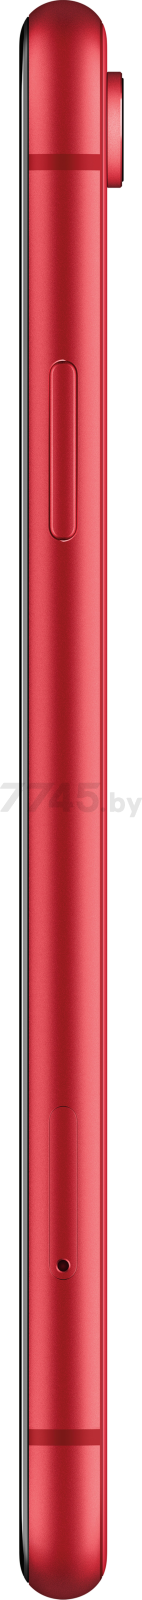 Смартфон APPLE iPhone XR 64GB Красный (MRY62) - Фото 4